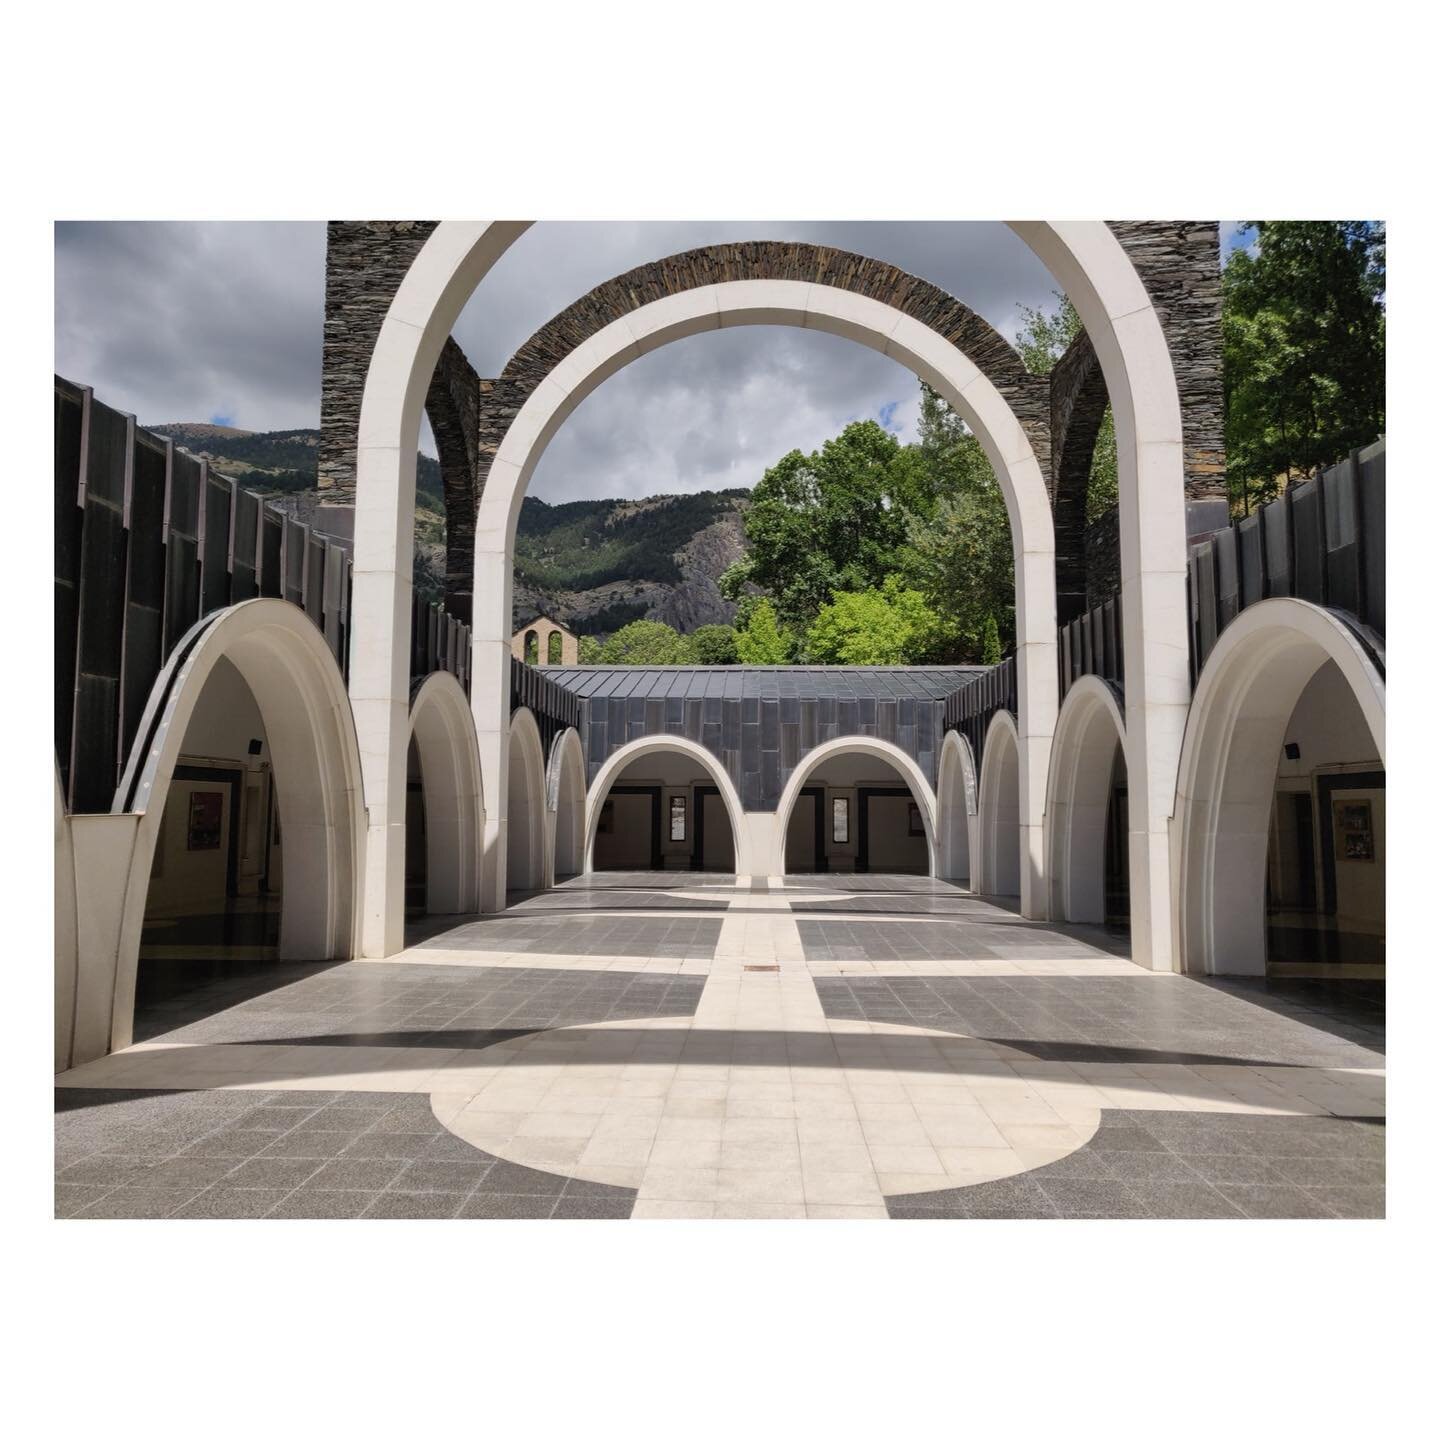 Andorra I: Meritxell Sanctuary

Bofill. 1978. 

#architecture #bofill #ricardobofill #rbta #andorra #travel